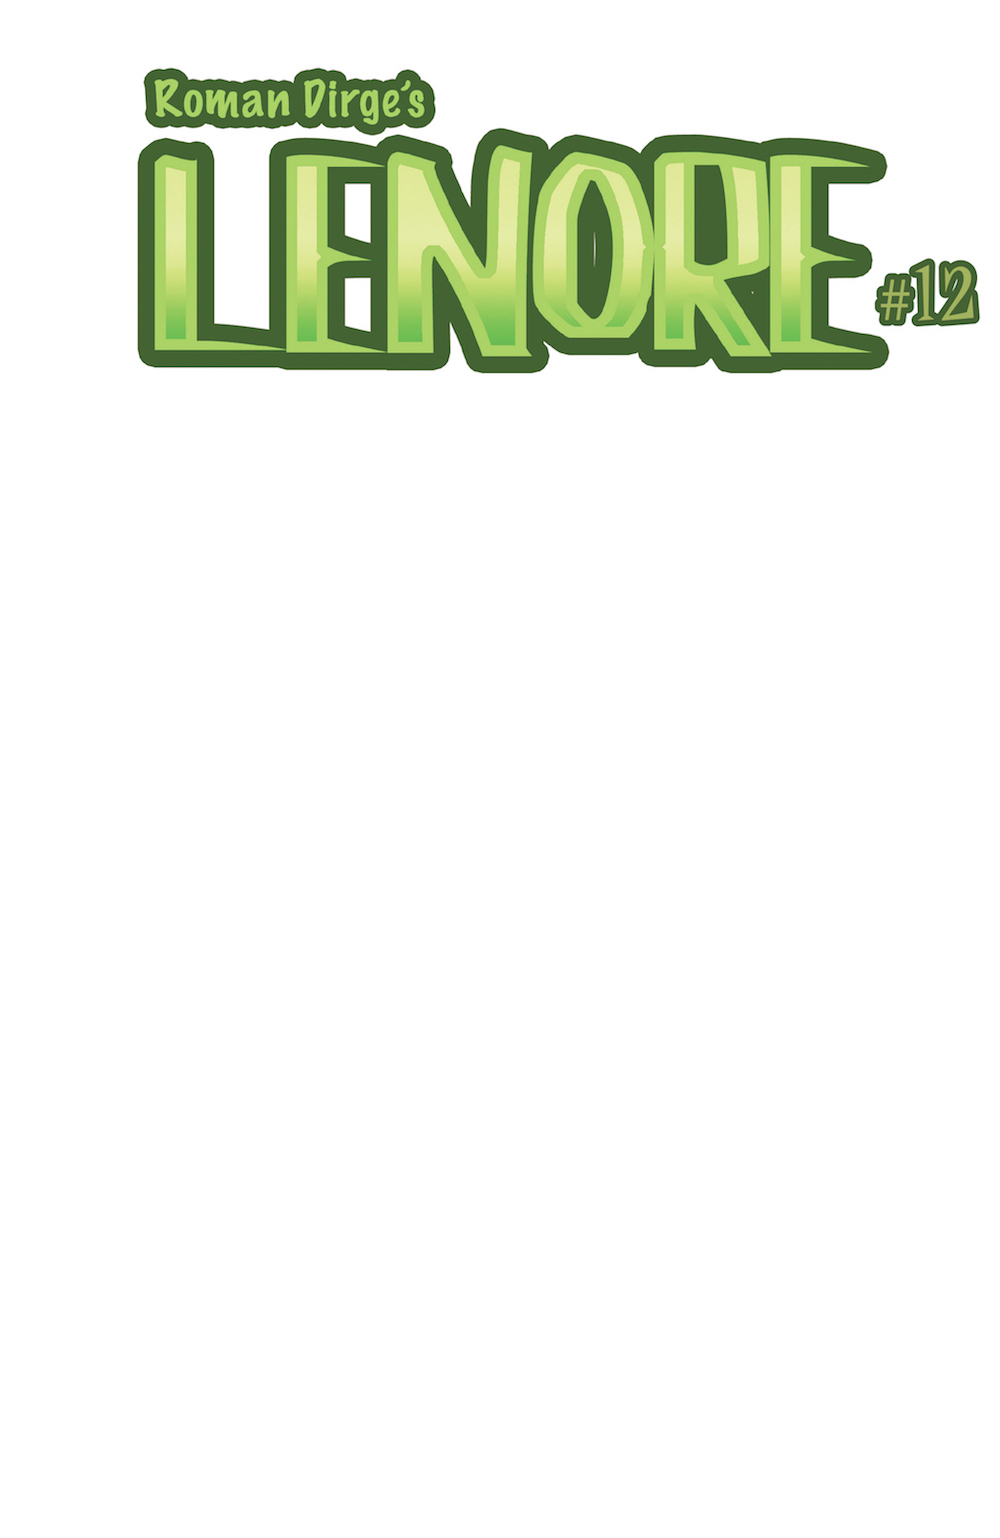 LENORE VOLUME III #1 CVR C BLANK (RES)